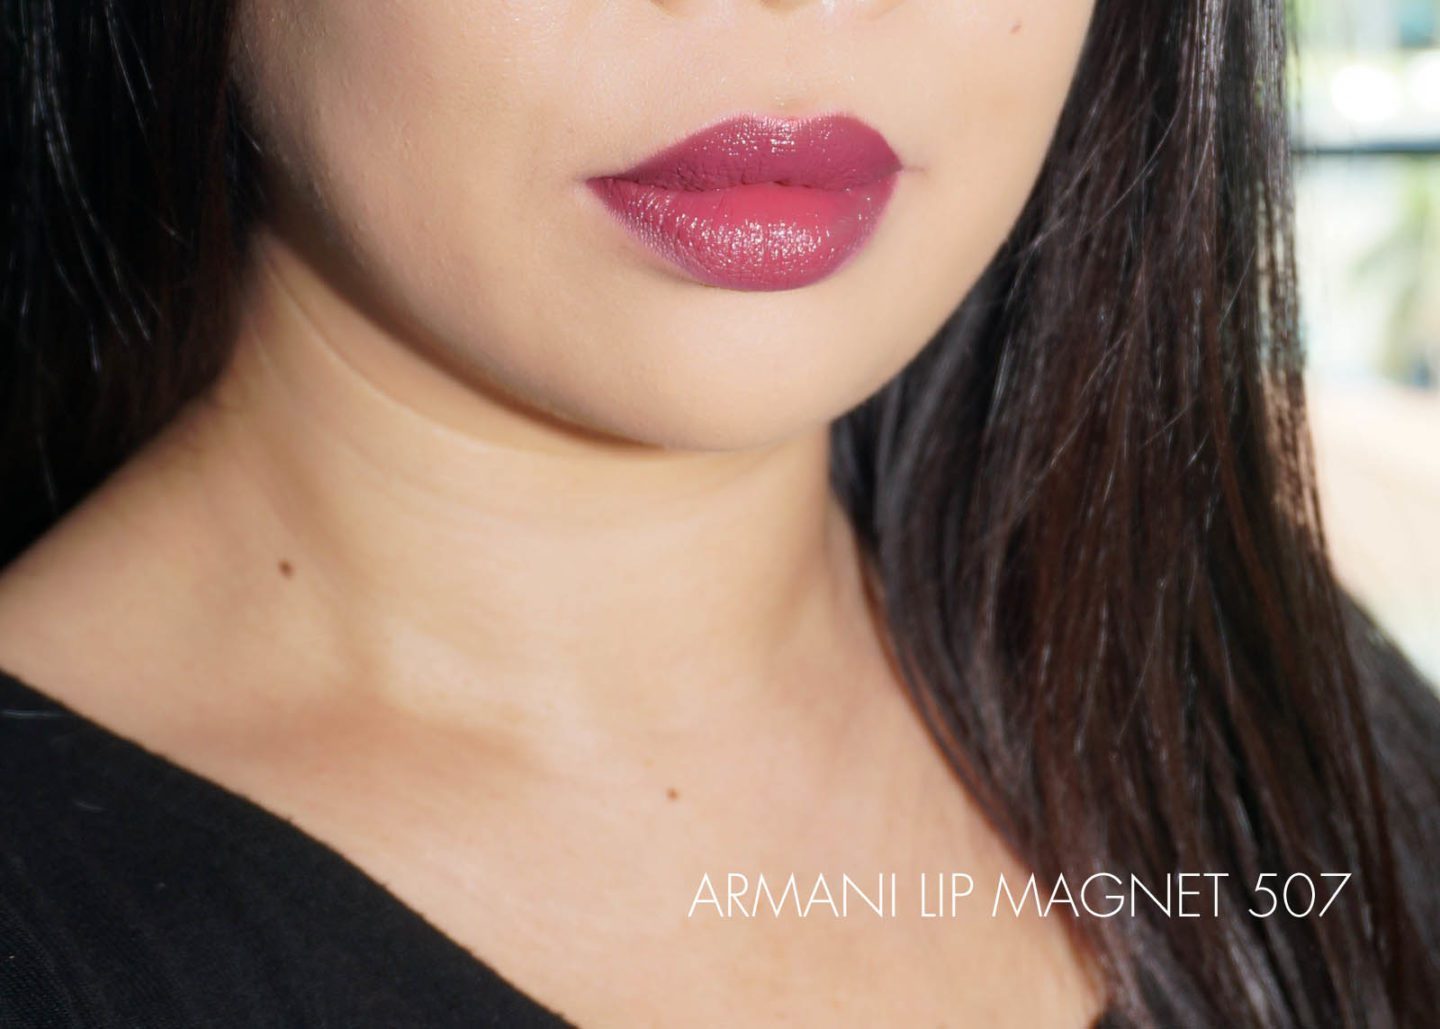 Armani Lip Magnet Swatch 507